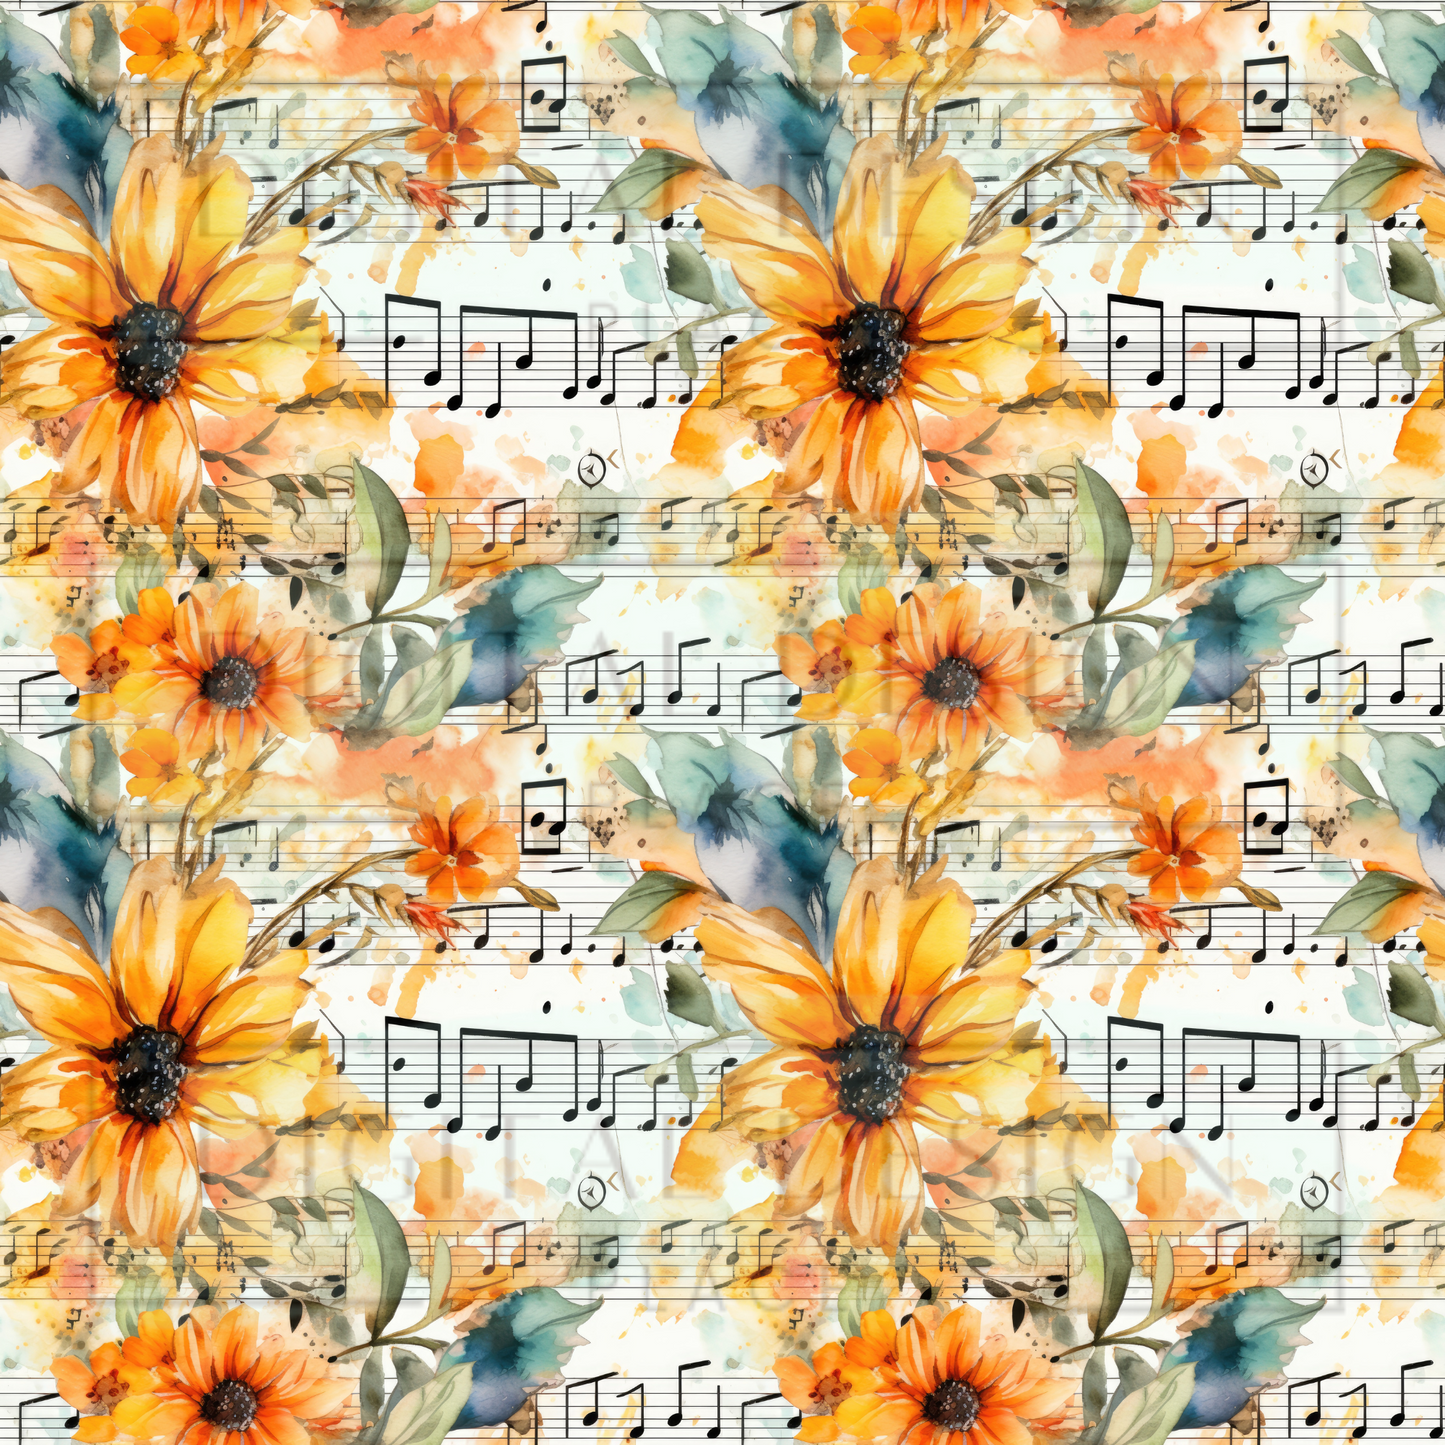 Sunflower Symphony VinylV1370